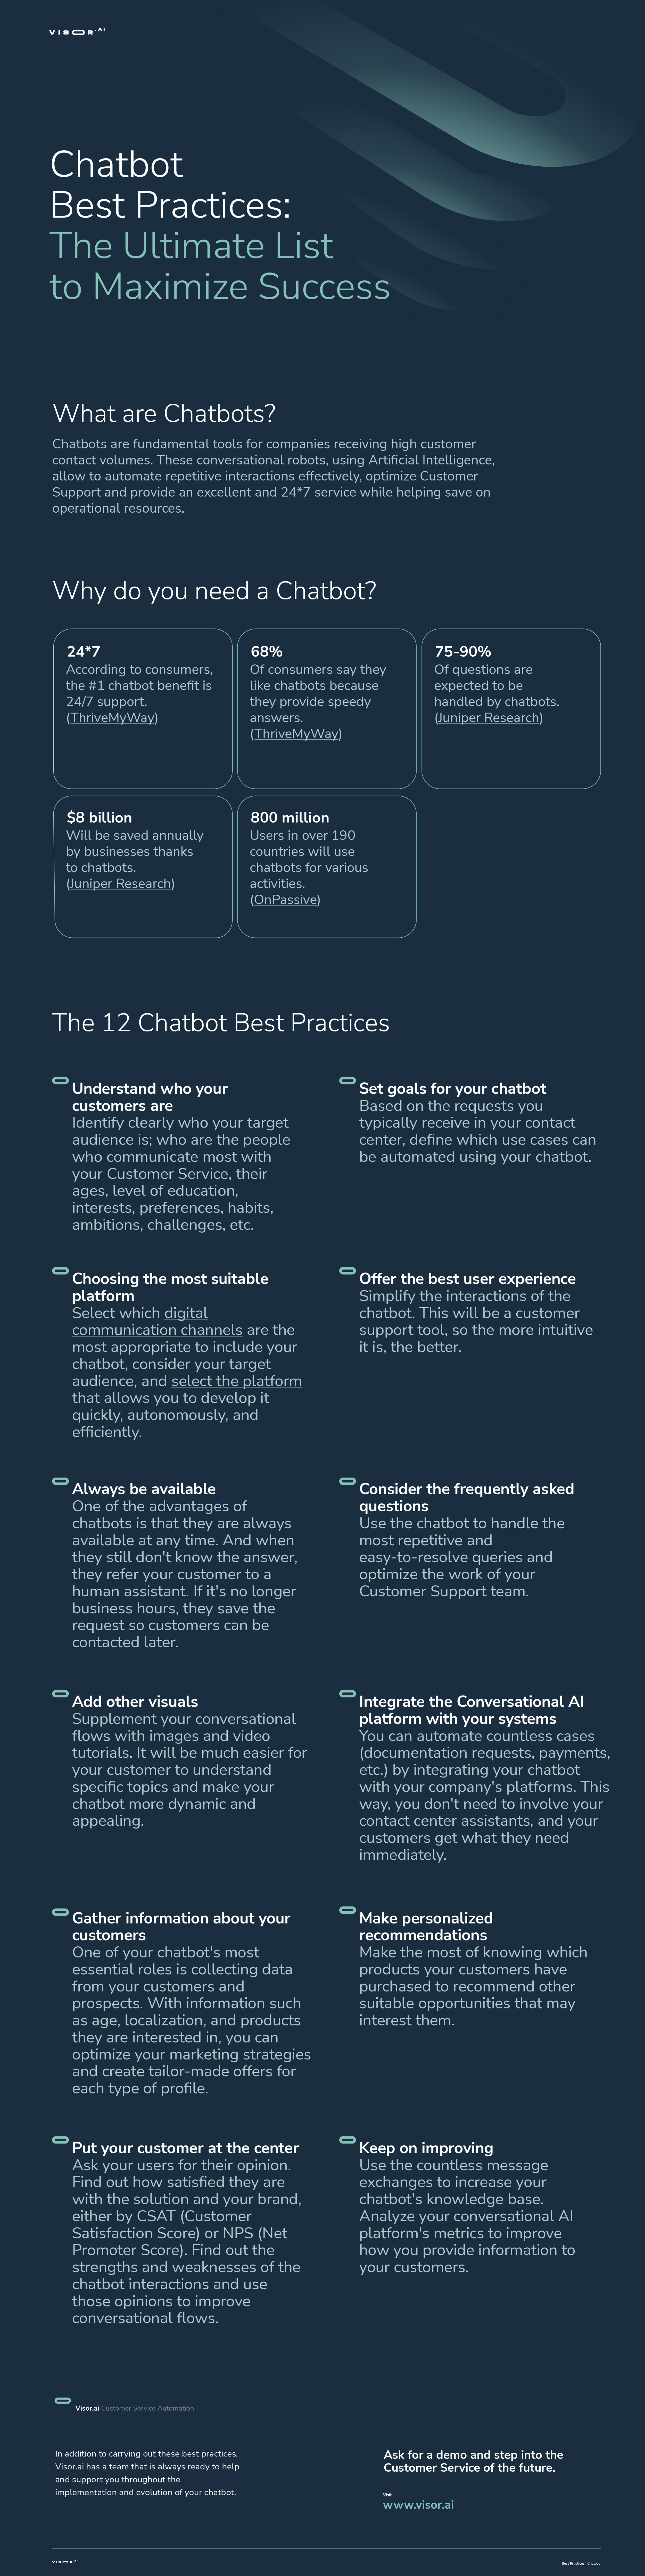 Chatbot best practices